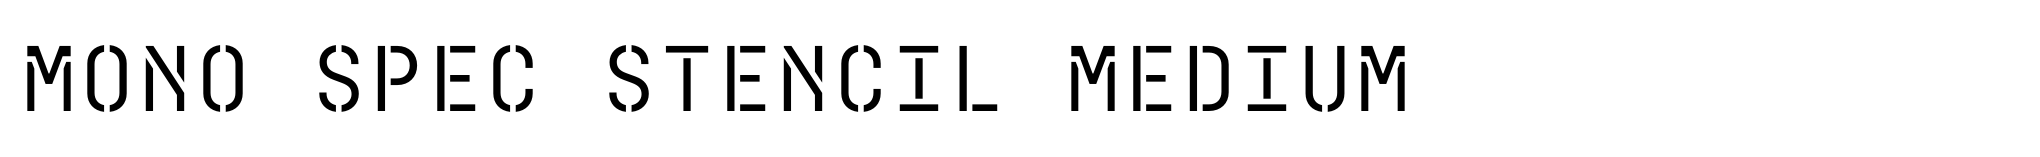 Mono Spec Stencil Medium image